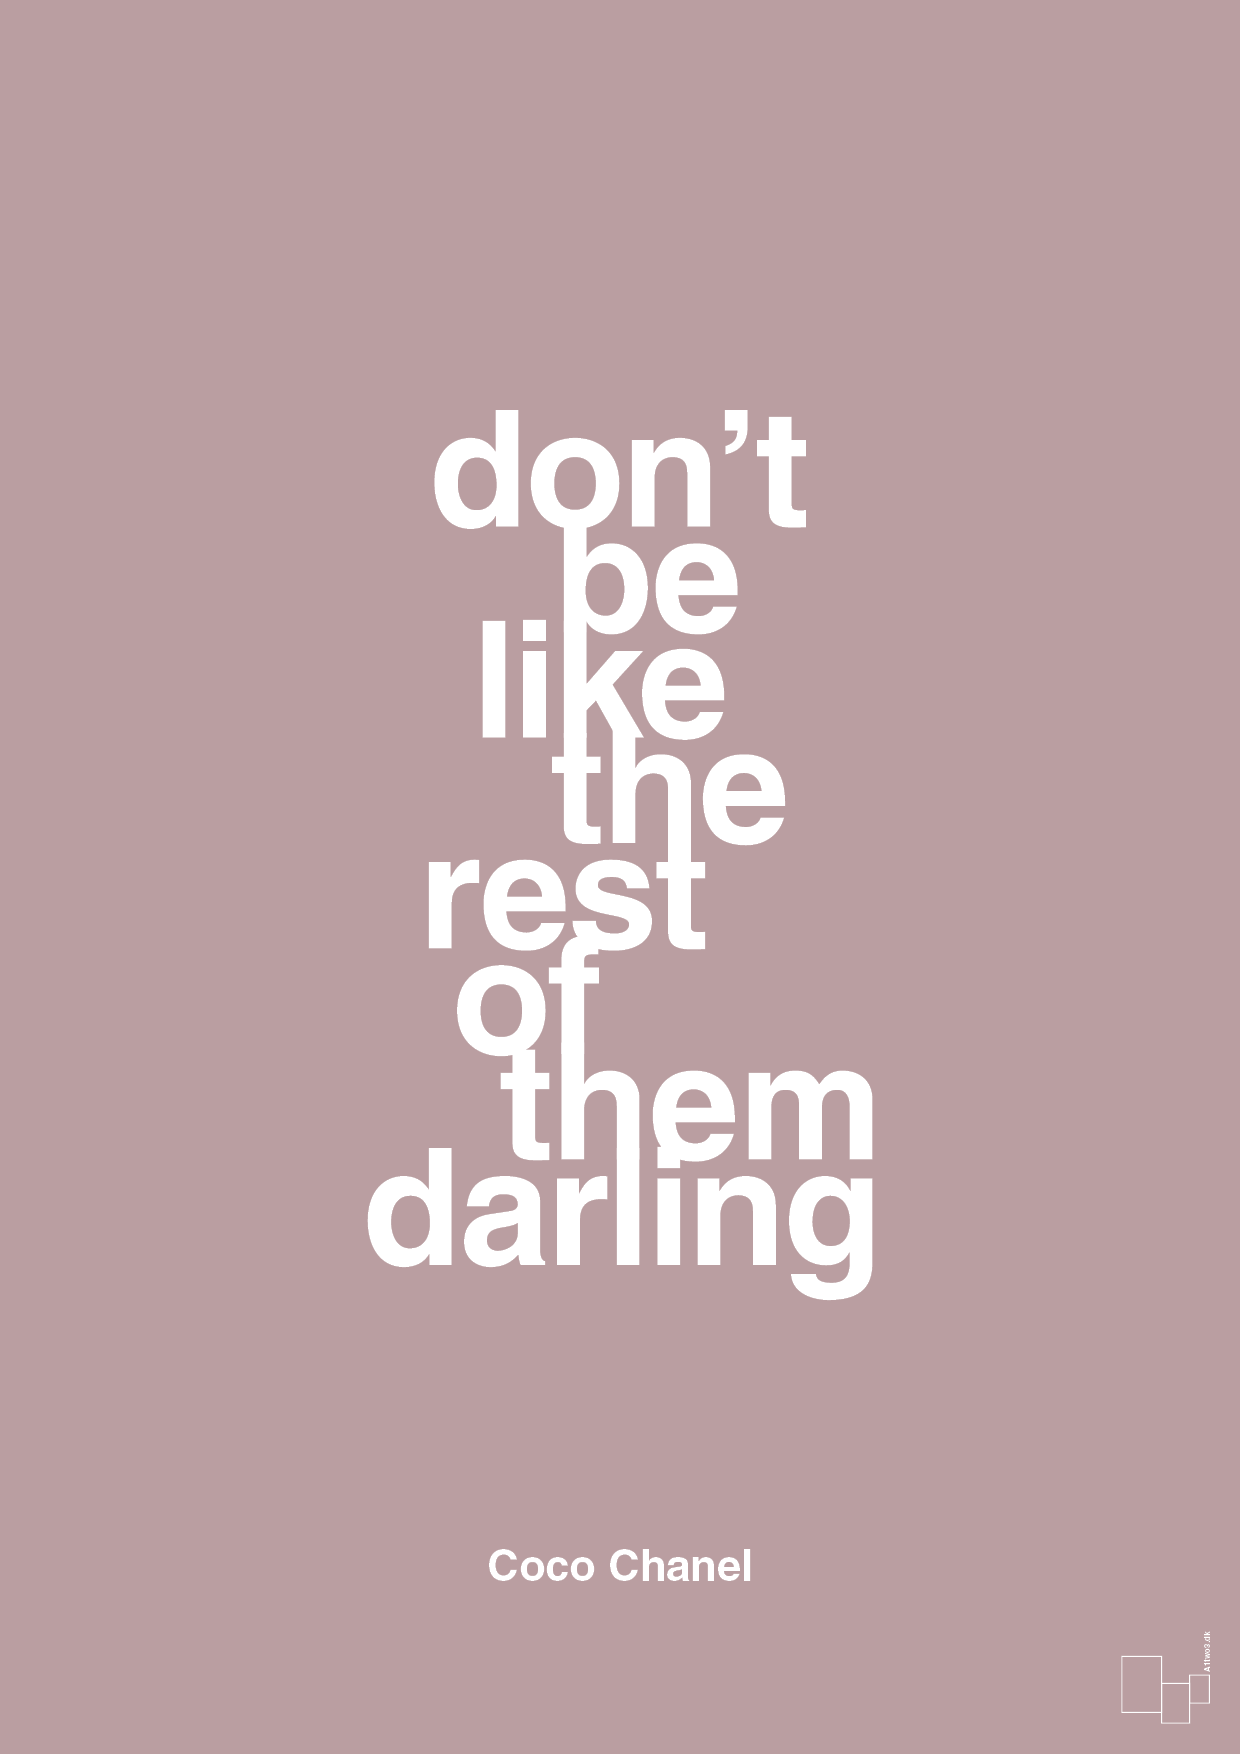 don’t be like the rest of them darling - Plakat med Citater i Light Rose